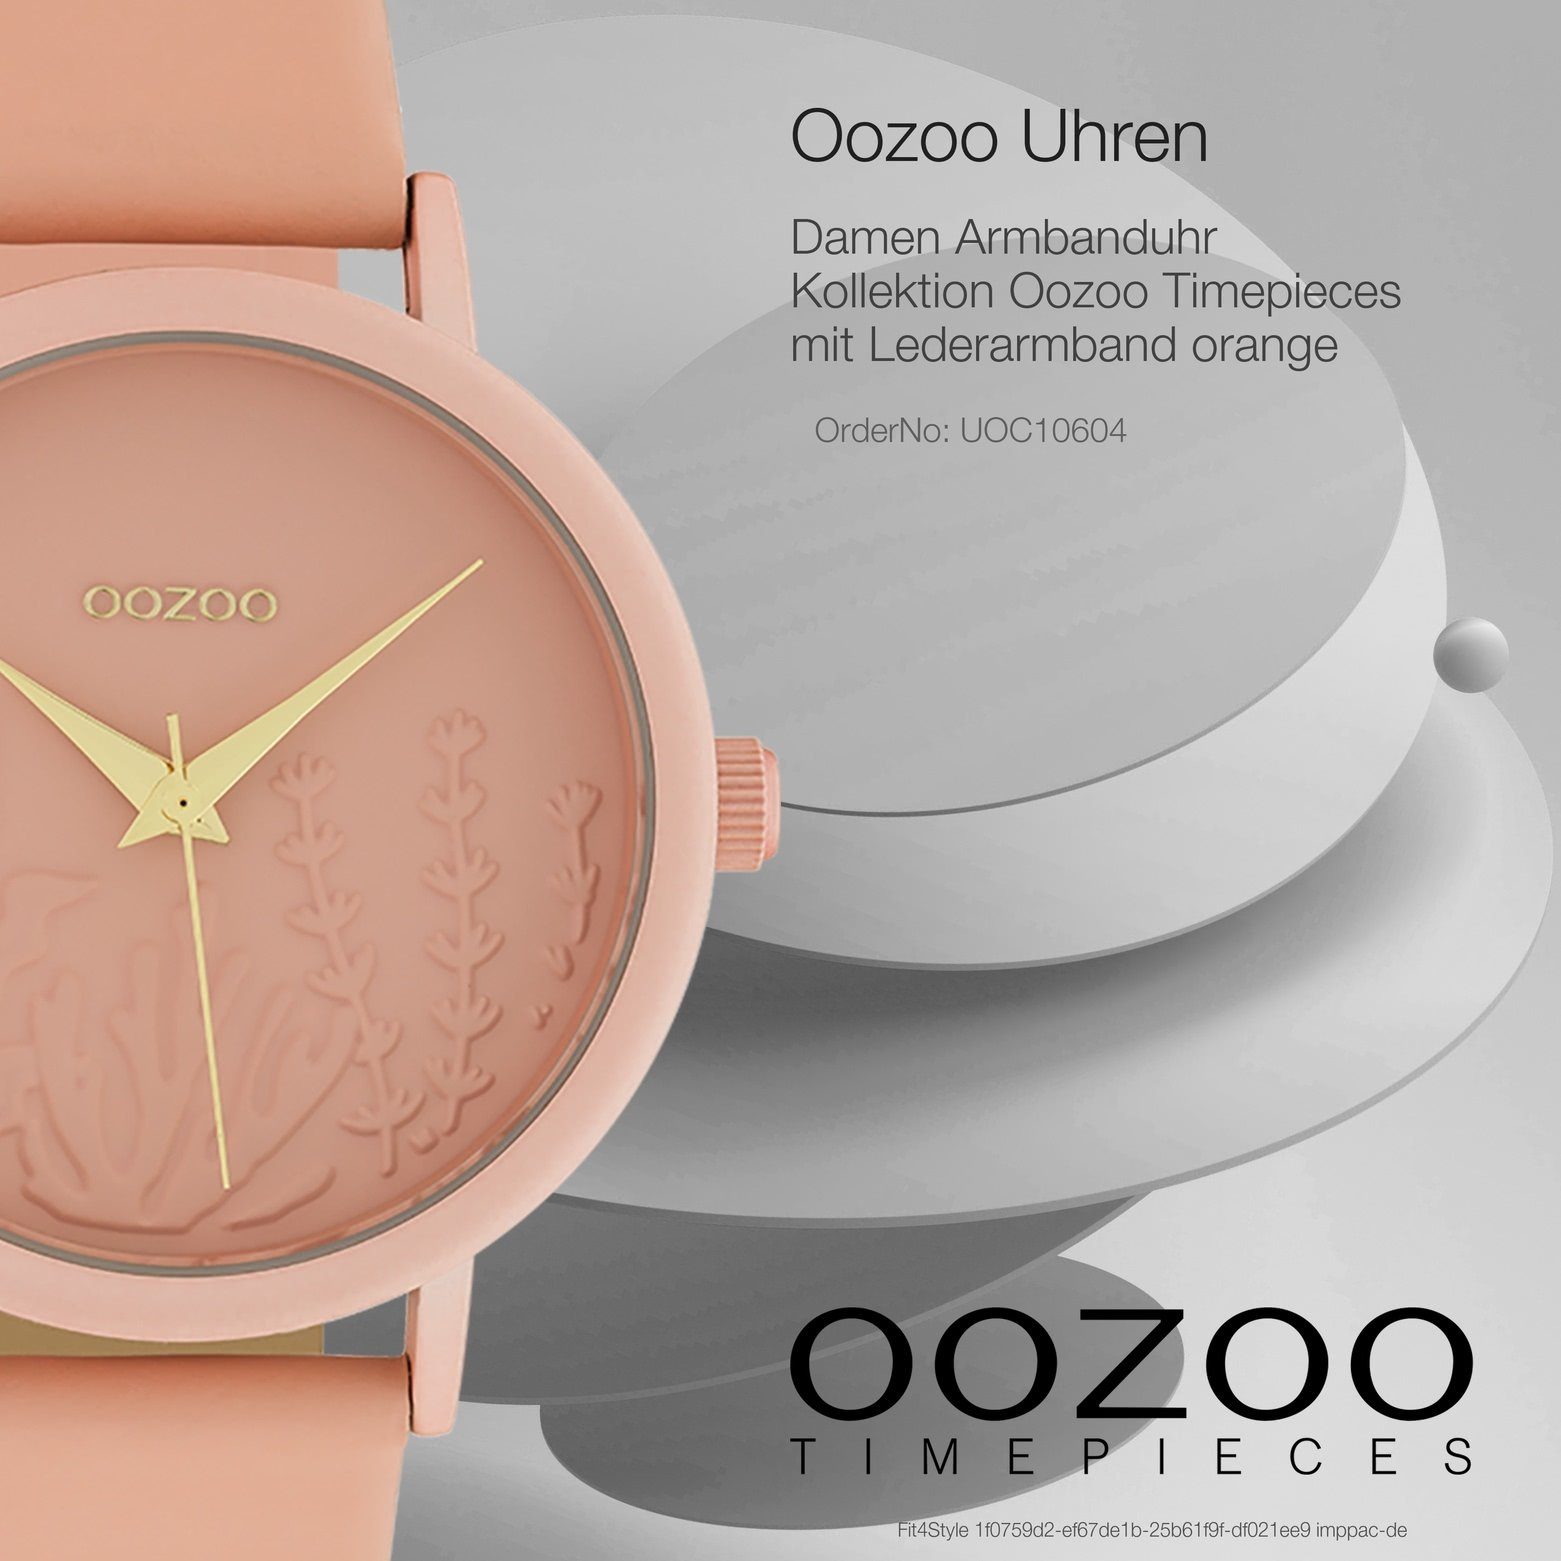 Armbanduhr Damen rund, OOZOO mittel Lederarmband, orange Fashion-Style (ca. Damenuhr Oozoo 36mm) Quarzuhr Analog,